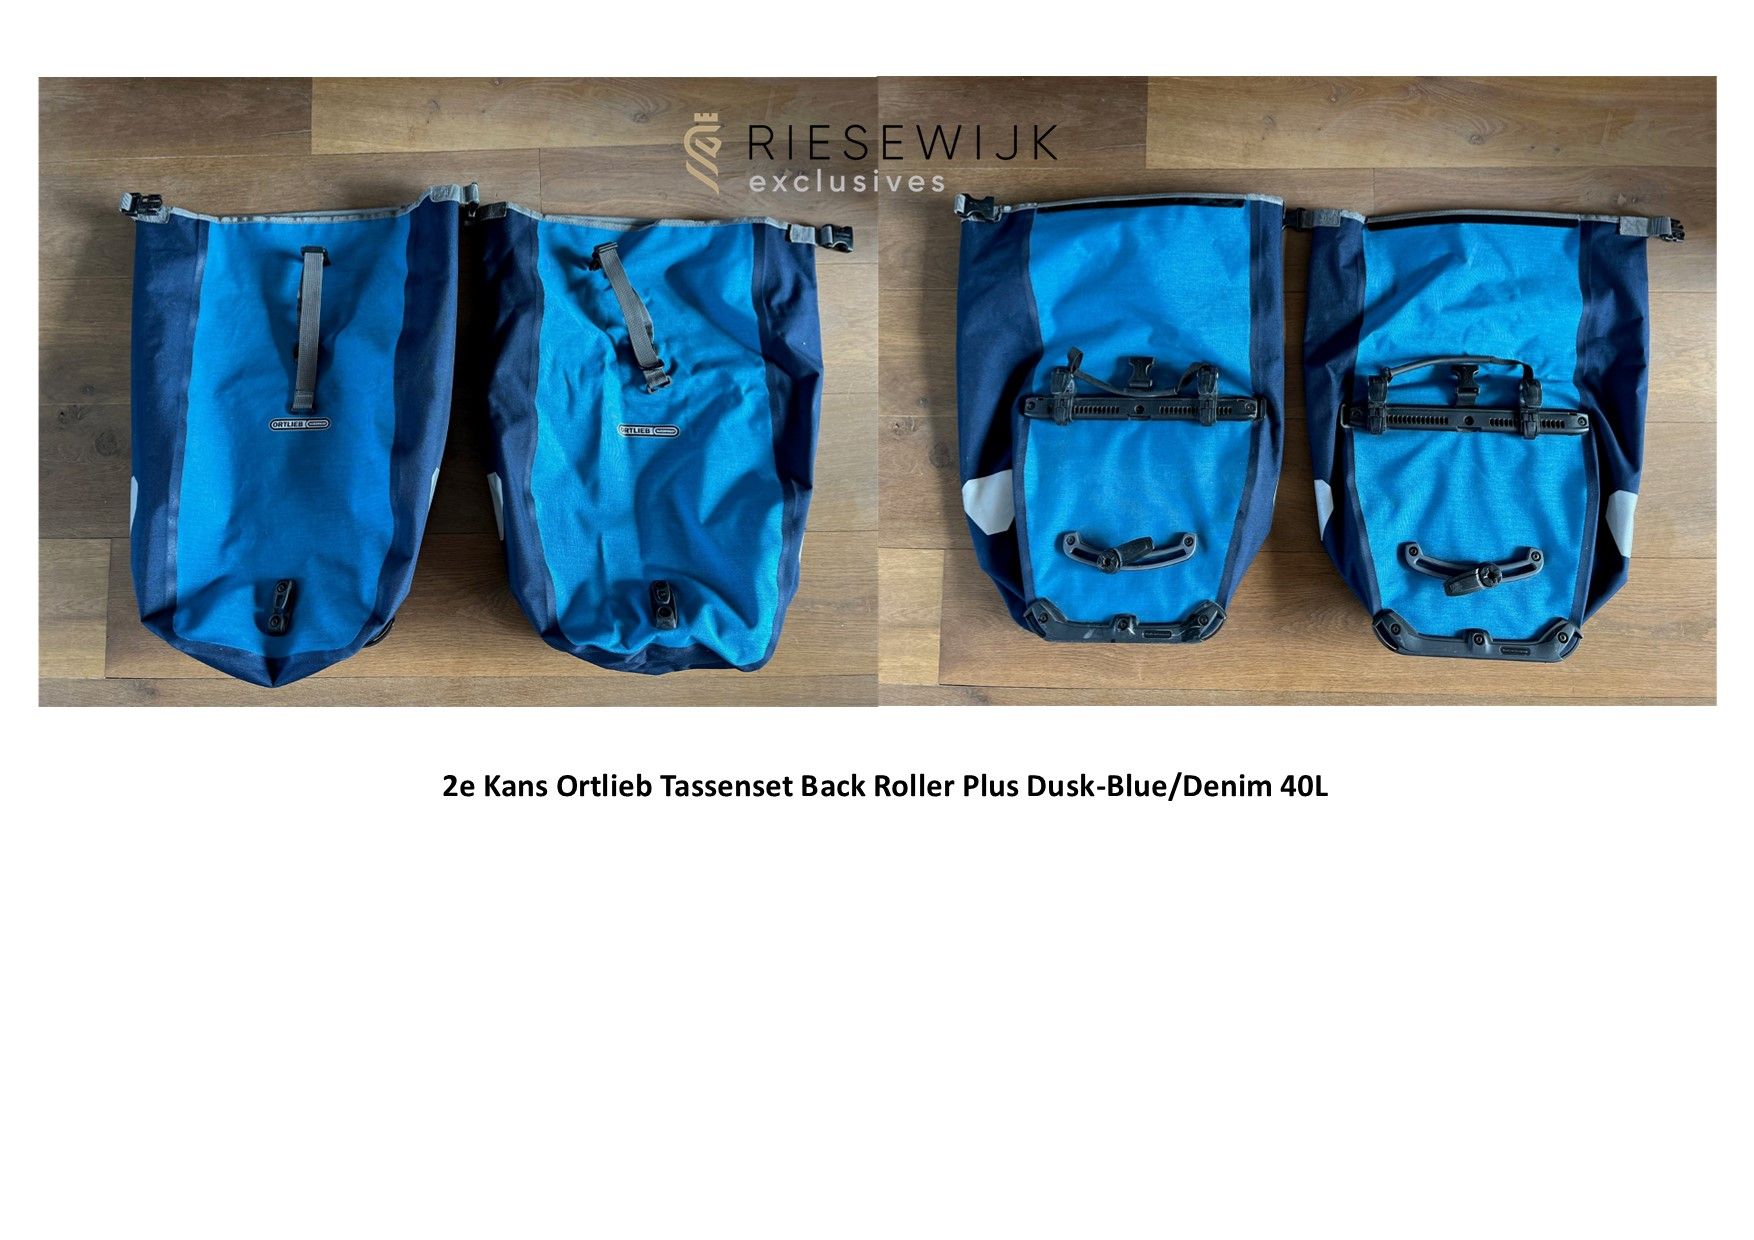 Stoutmoedig Oneindigheid Modernisering 2e kans Ortlieb Back Roller Plus Set Dusk-Blue/Denim 40L - Riesewijk  Exclusives